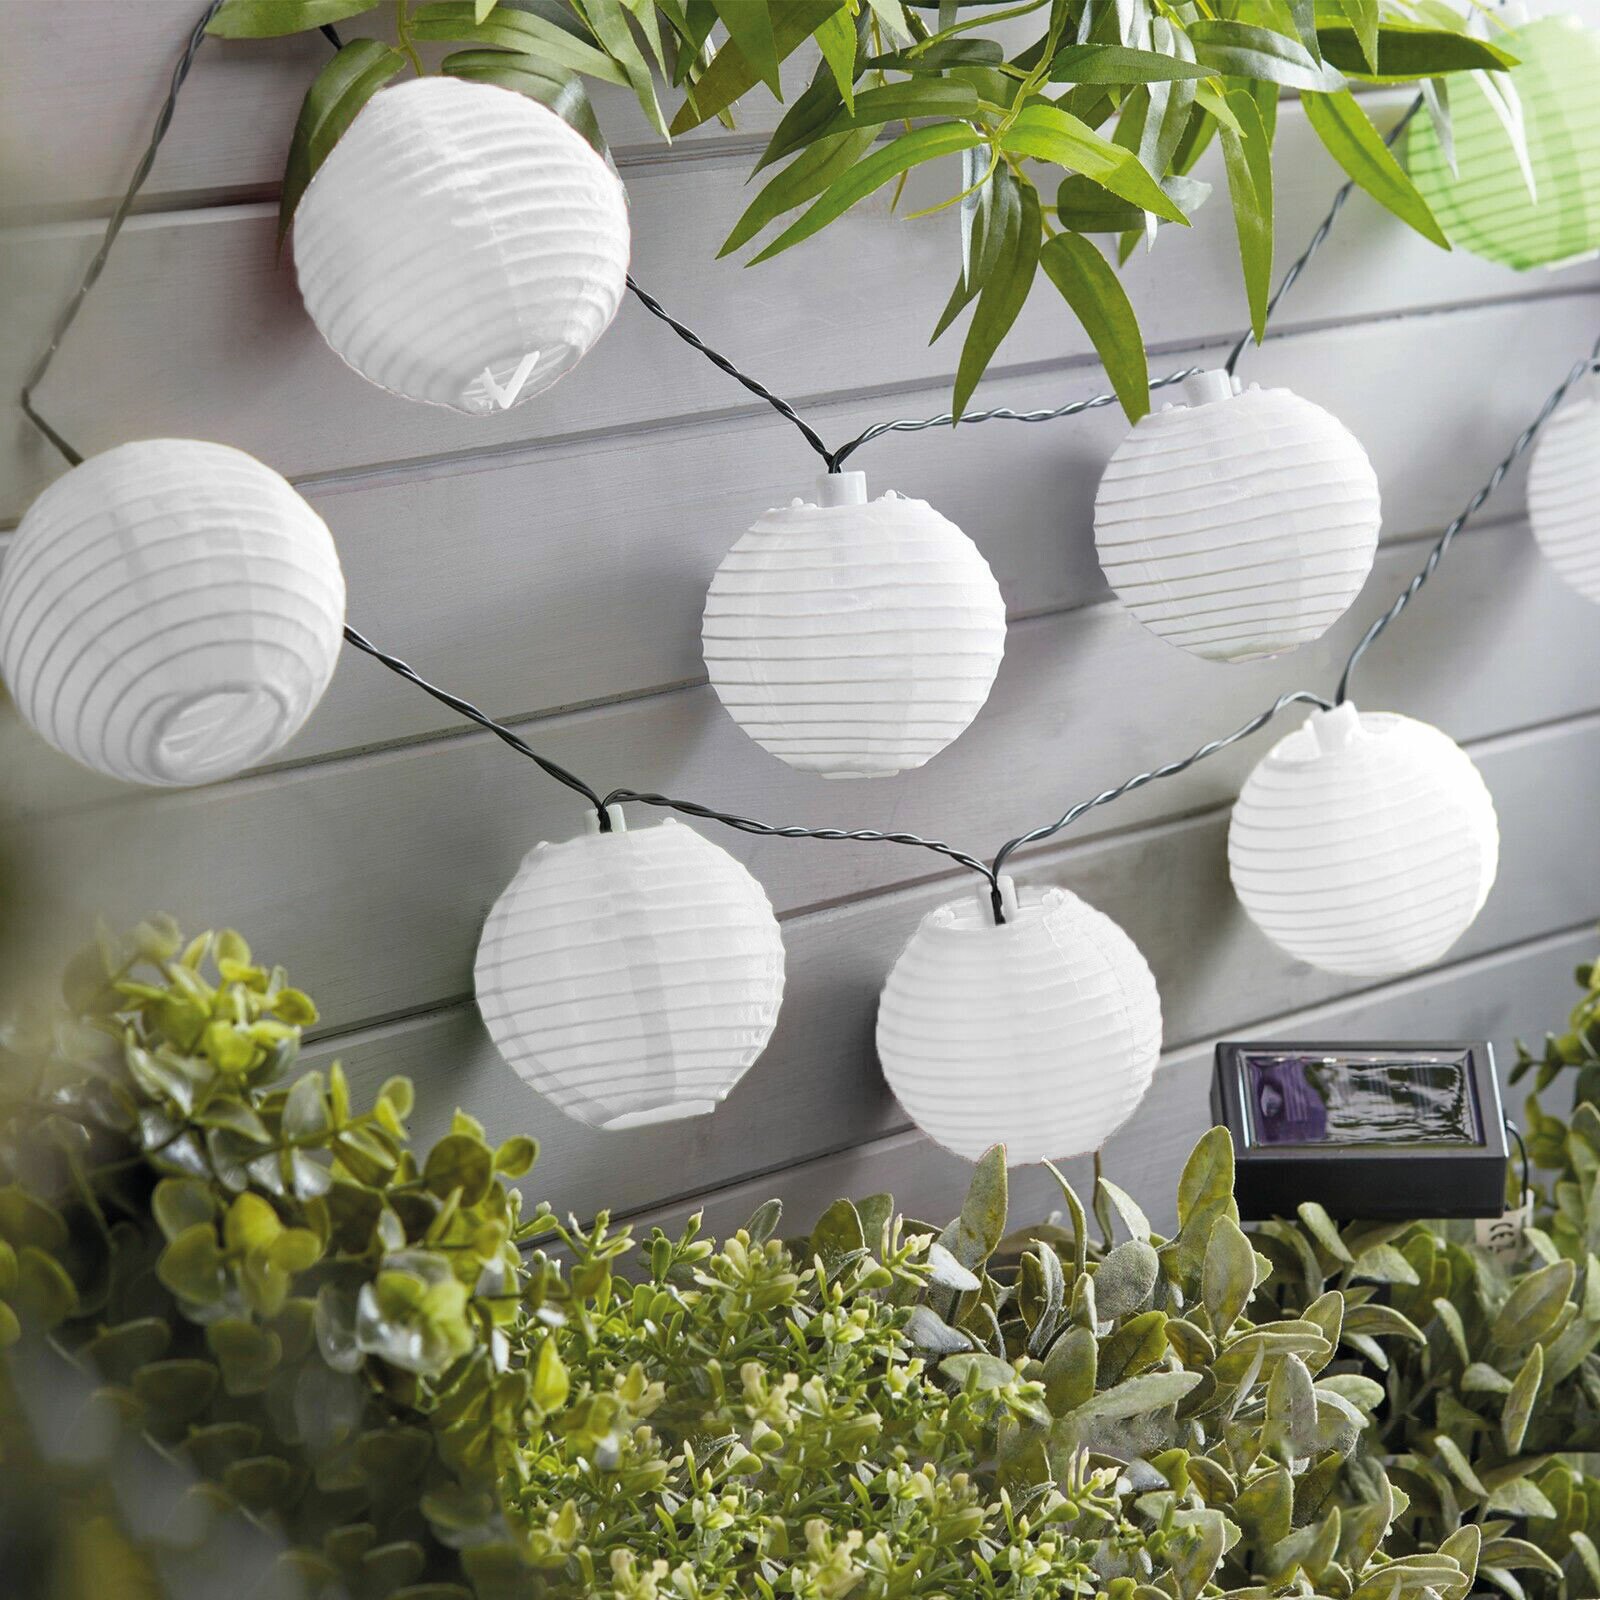 Garden of Eden - Şir 10 lampioane solare LED alb rece 3,7 m thumb